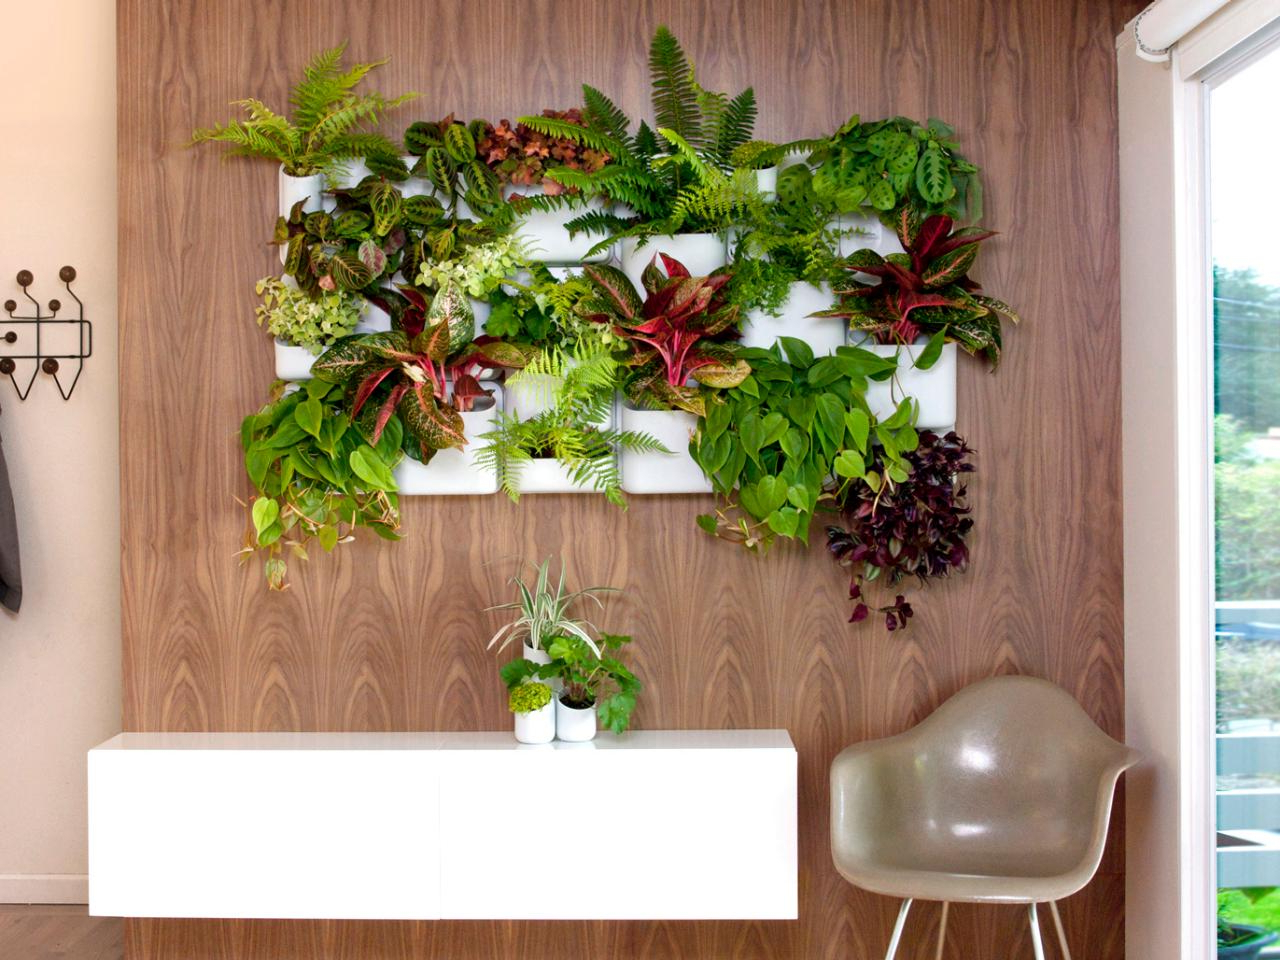 10 Vertical Planter Ideas For Summer Hgtvs Decorating